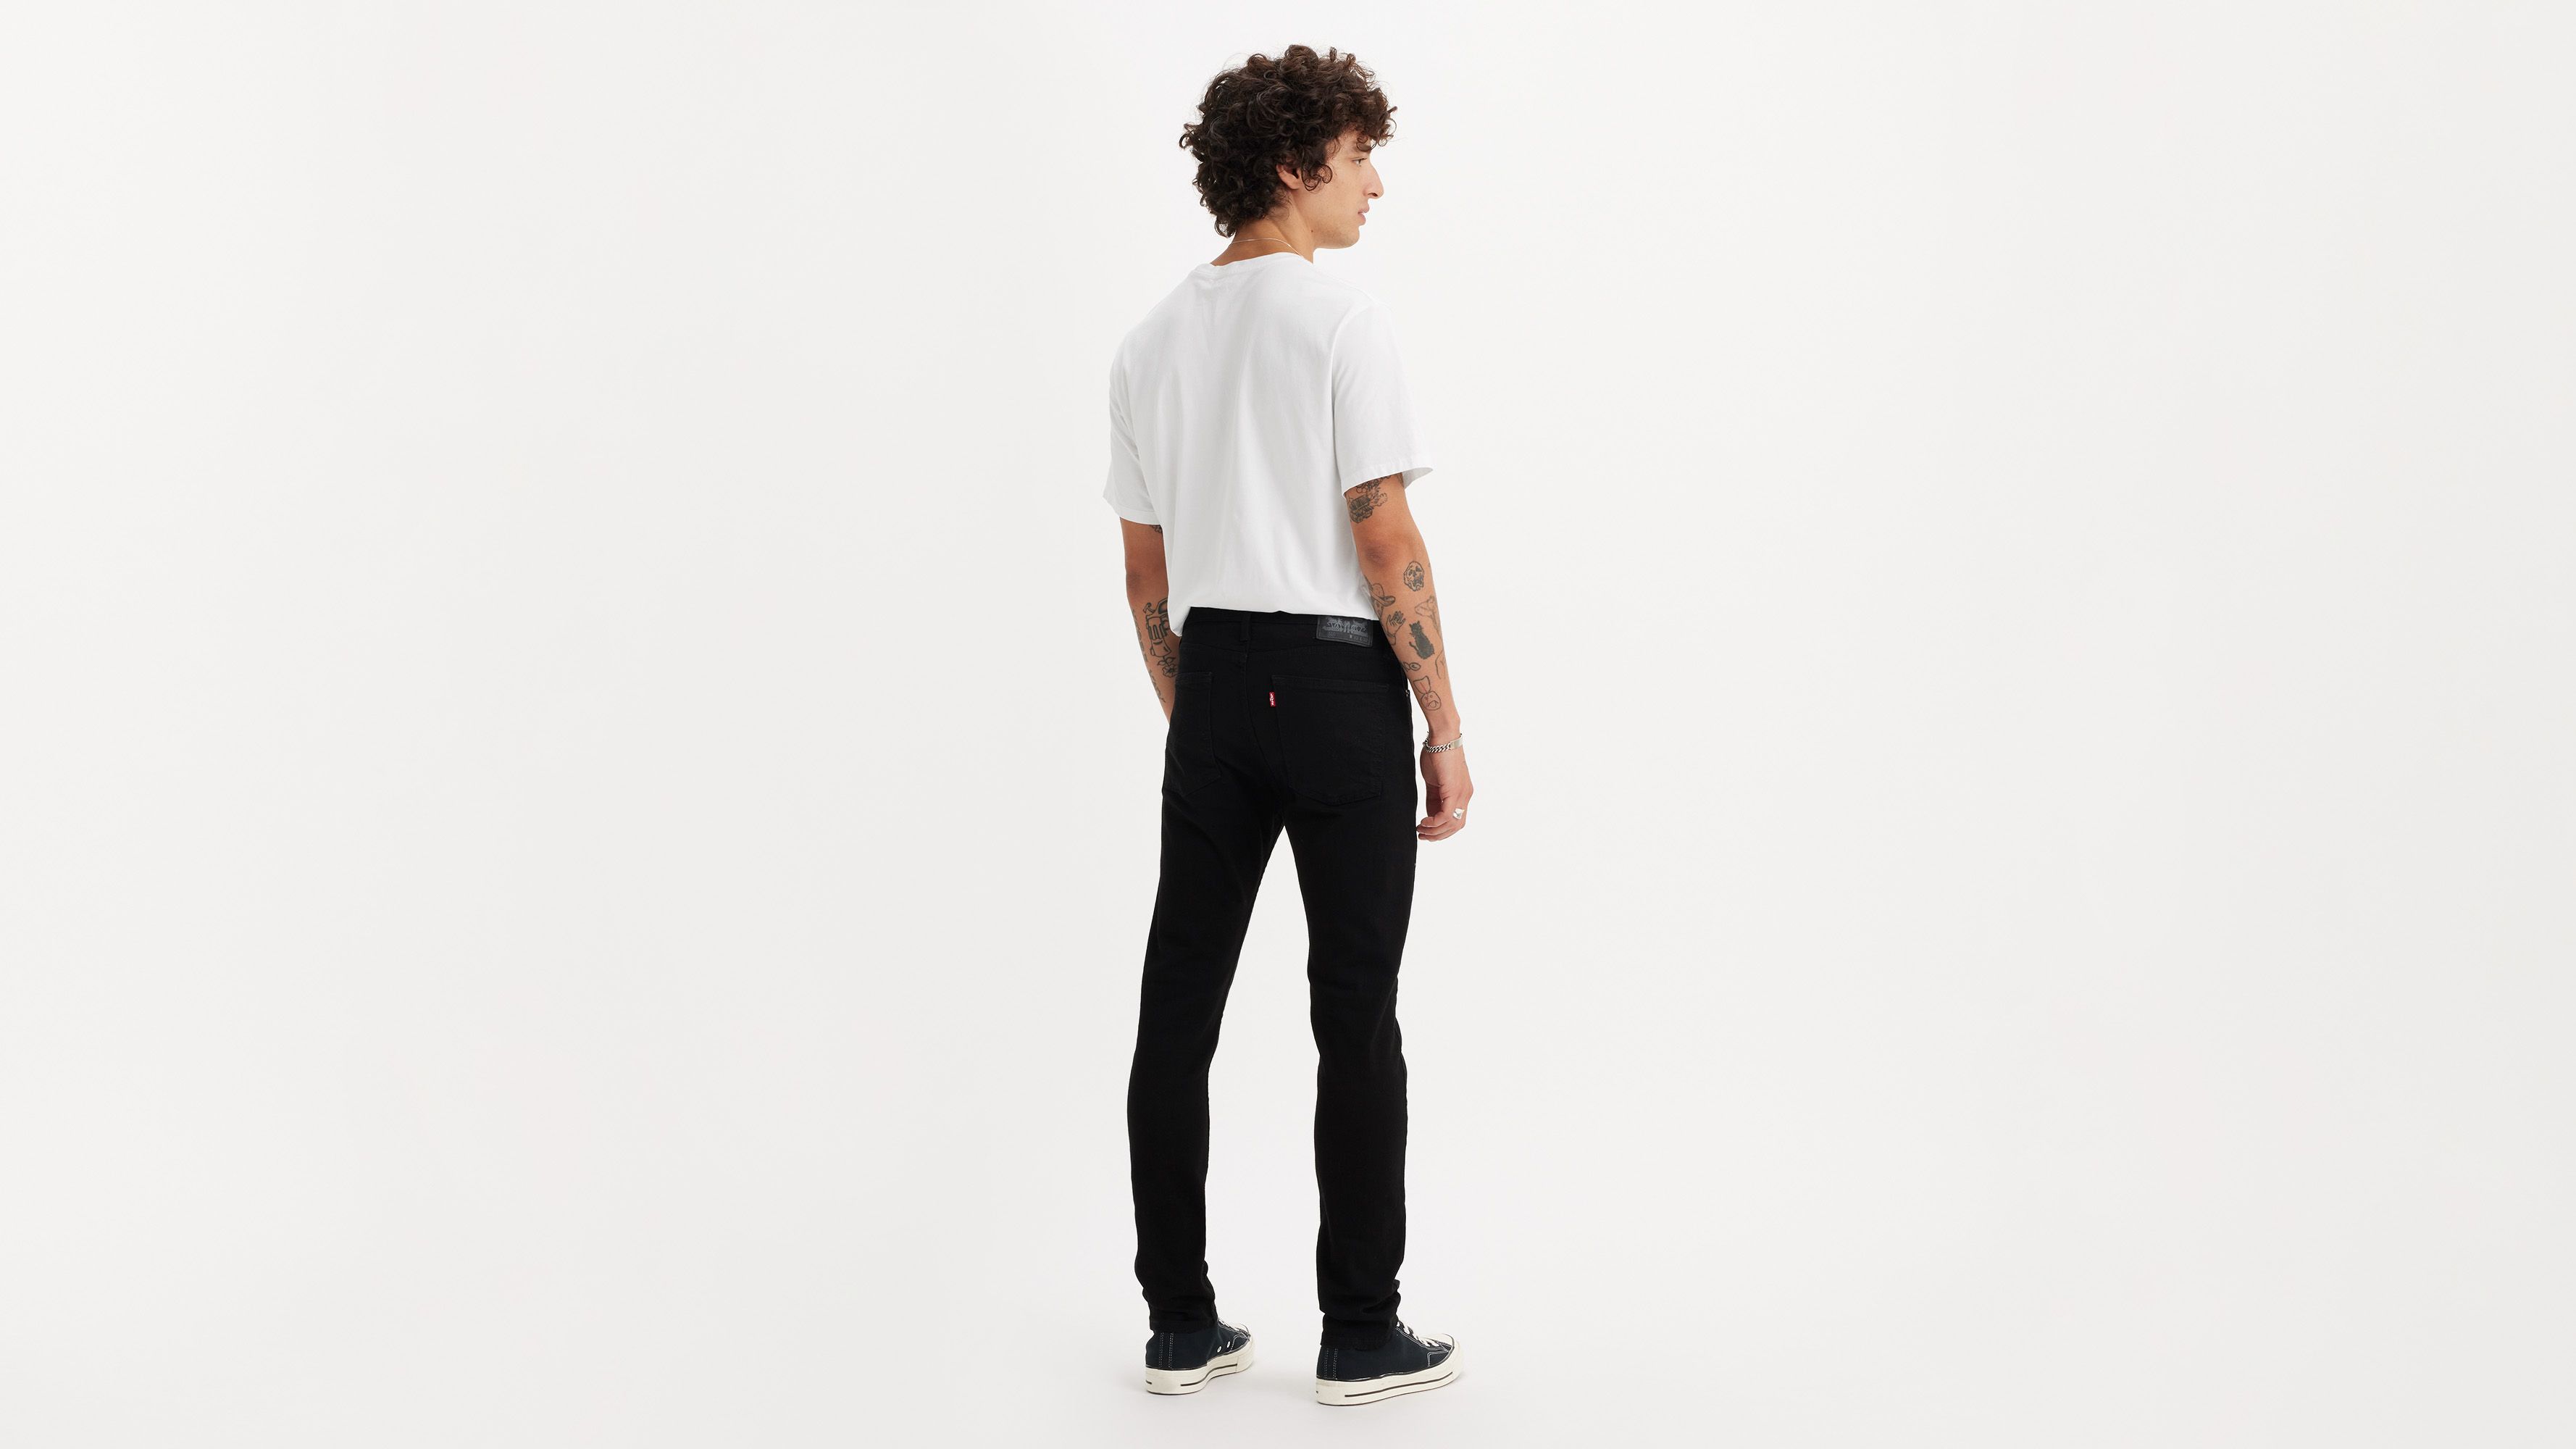 510™ Skinny Fit Levi's® Flex Men's Jeans - Black | Levi's® US